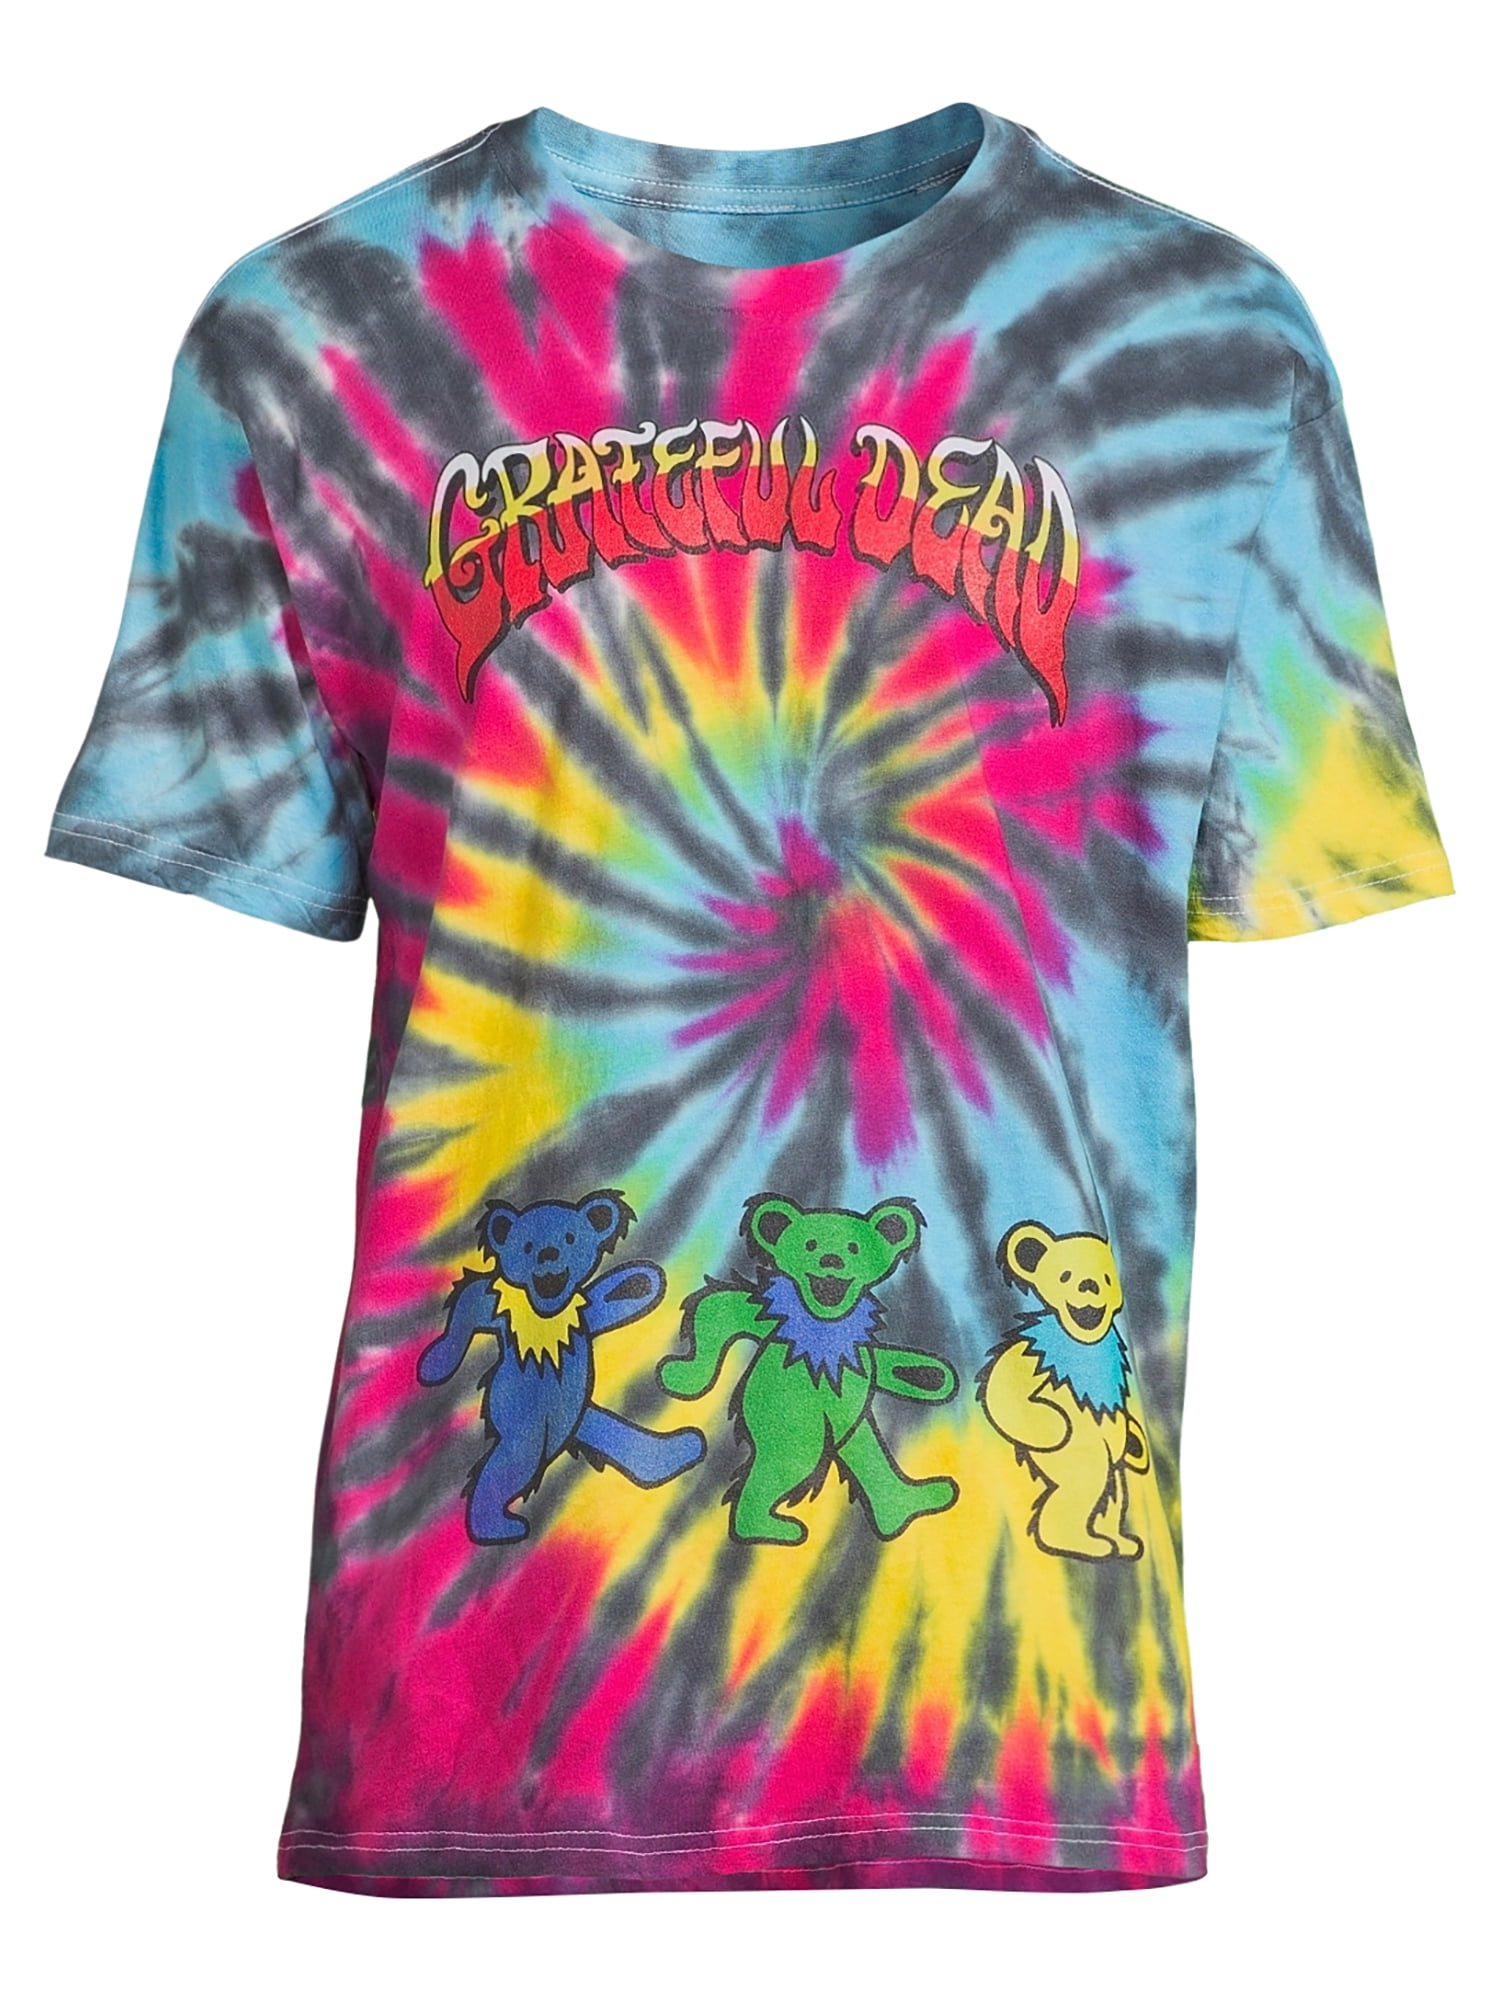 Dancing Bears Grateful Dead shirt - The Dancing Bears dancing around the  Earth - Flag Bears - Dead & Company shirt - sizes: small, medium, large,  XL